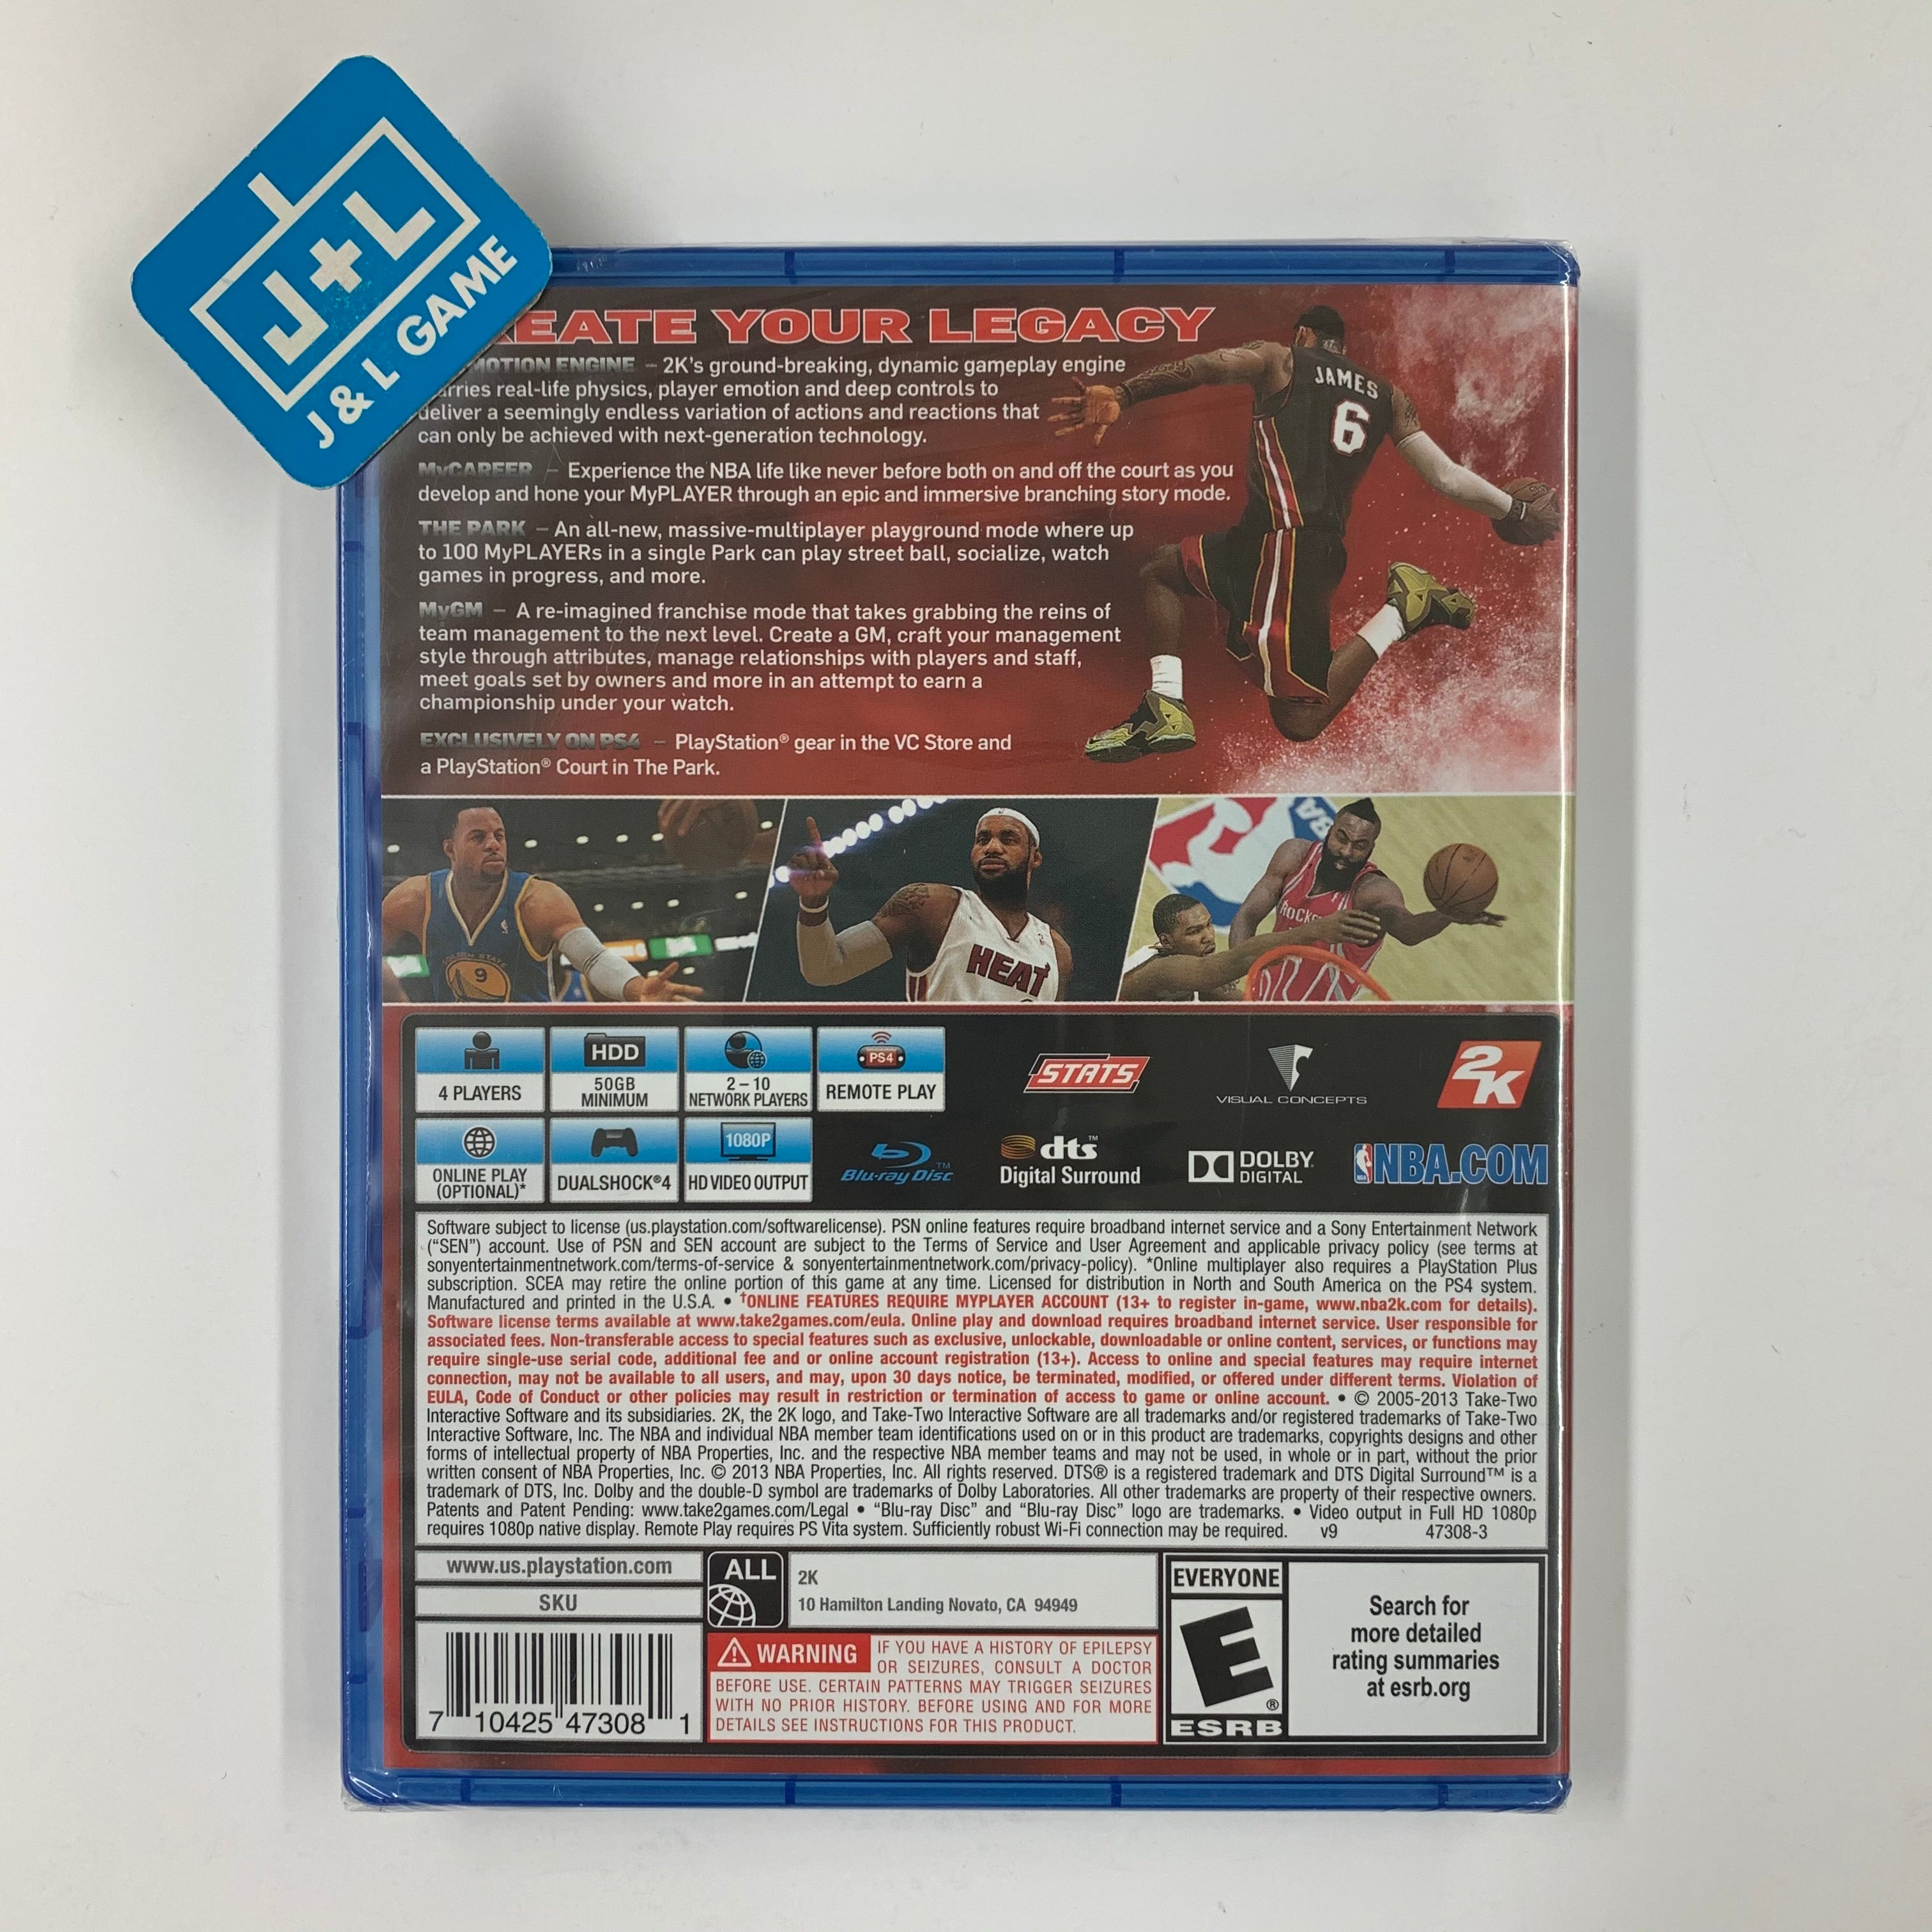 NBA 2K14 - (PS4) PlayStation 4 Video Games 2K Sports   